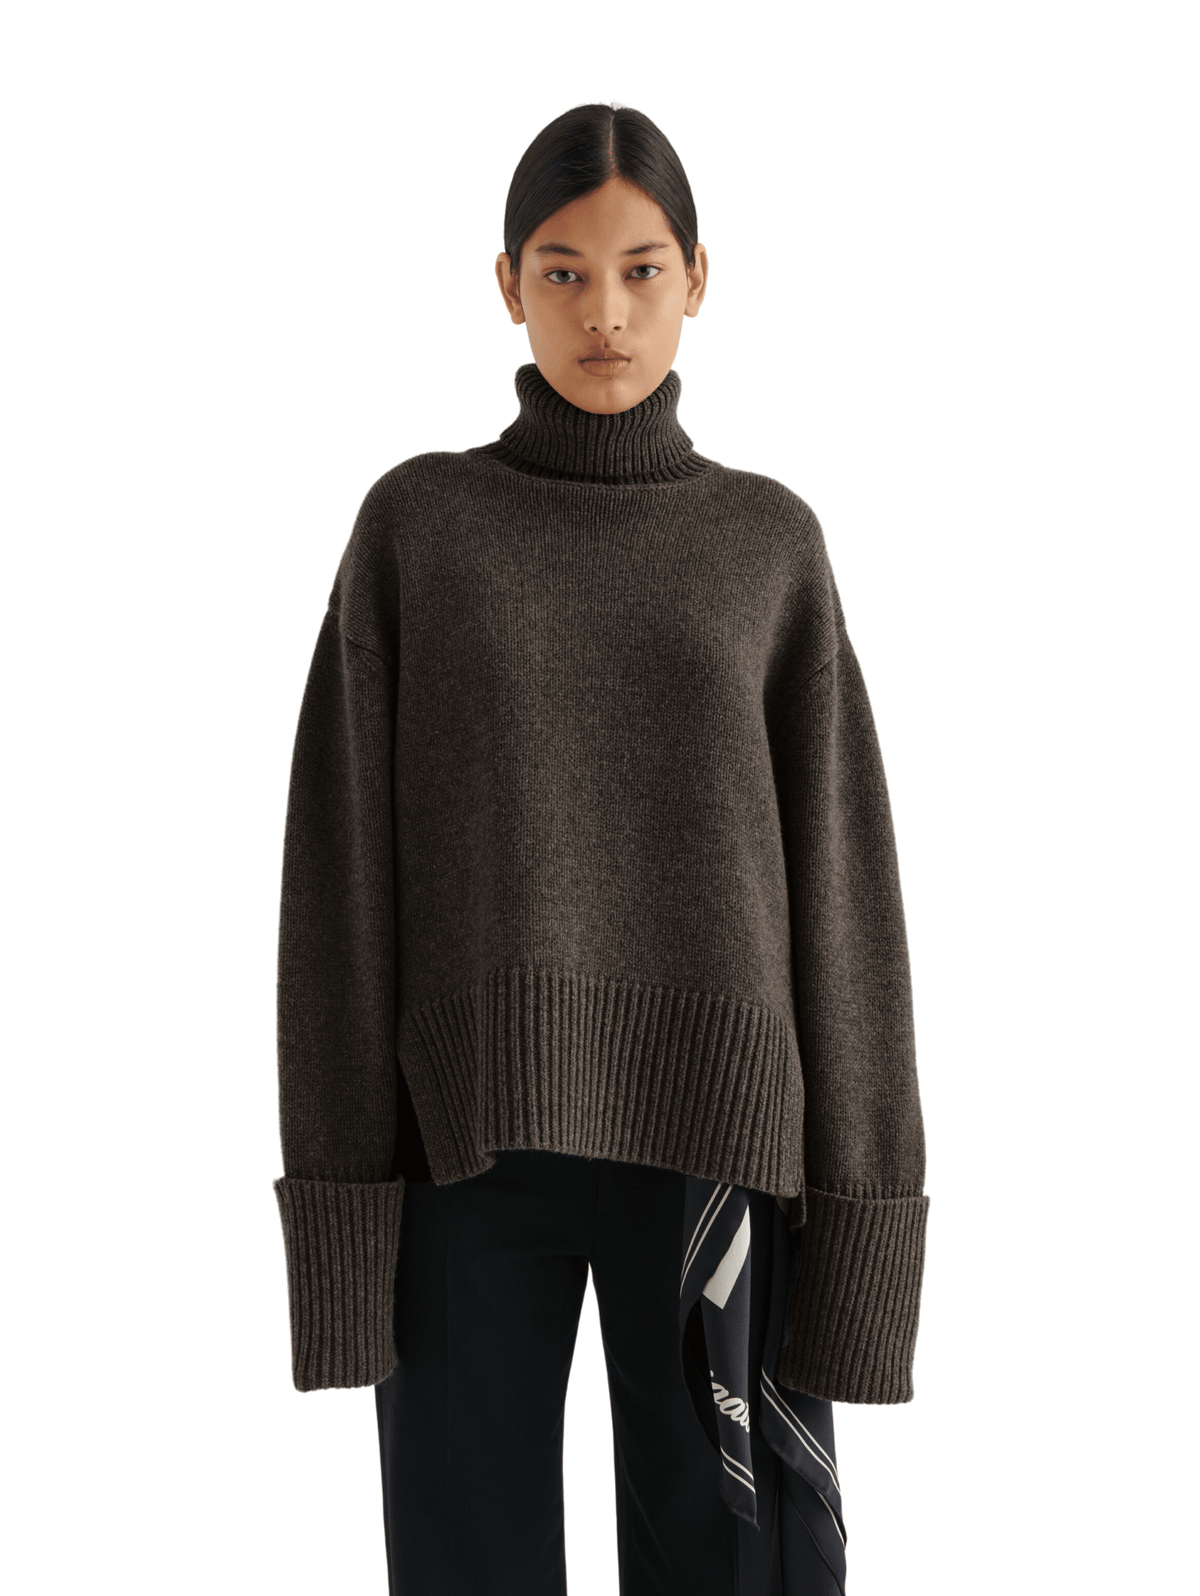 Remain Turtleneck Sweater / Dark Brown Womens Axel Arigato 